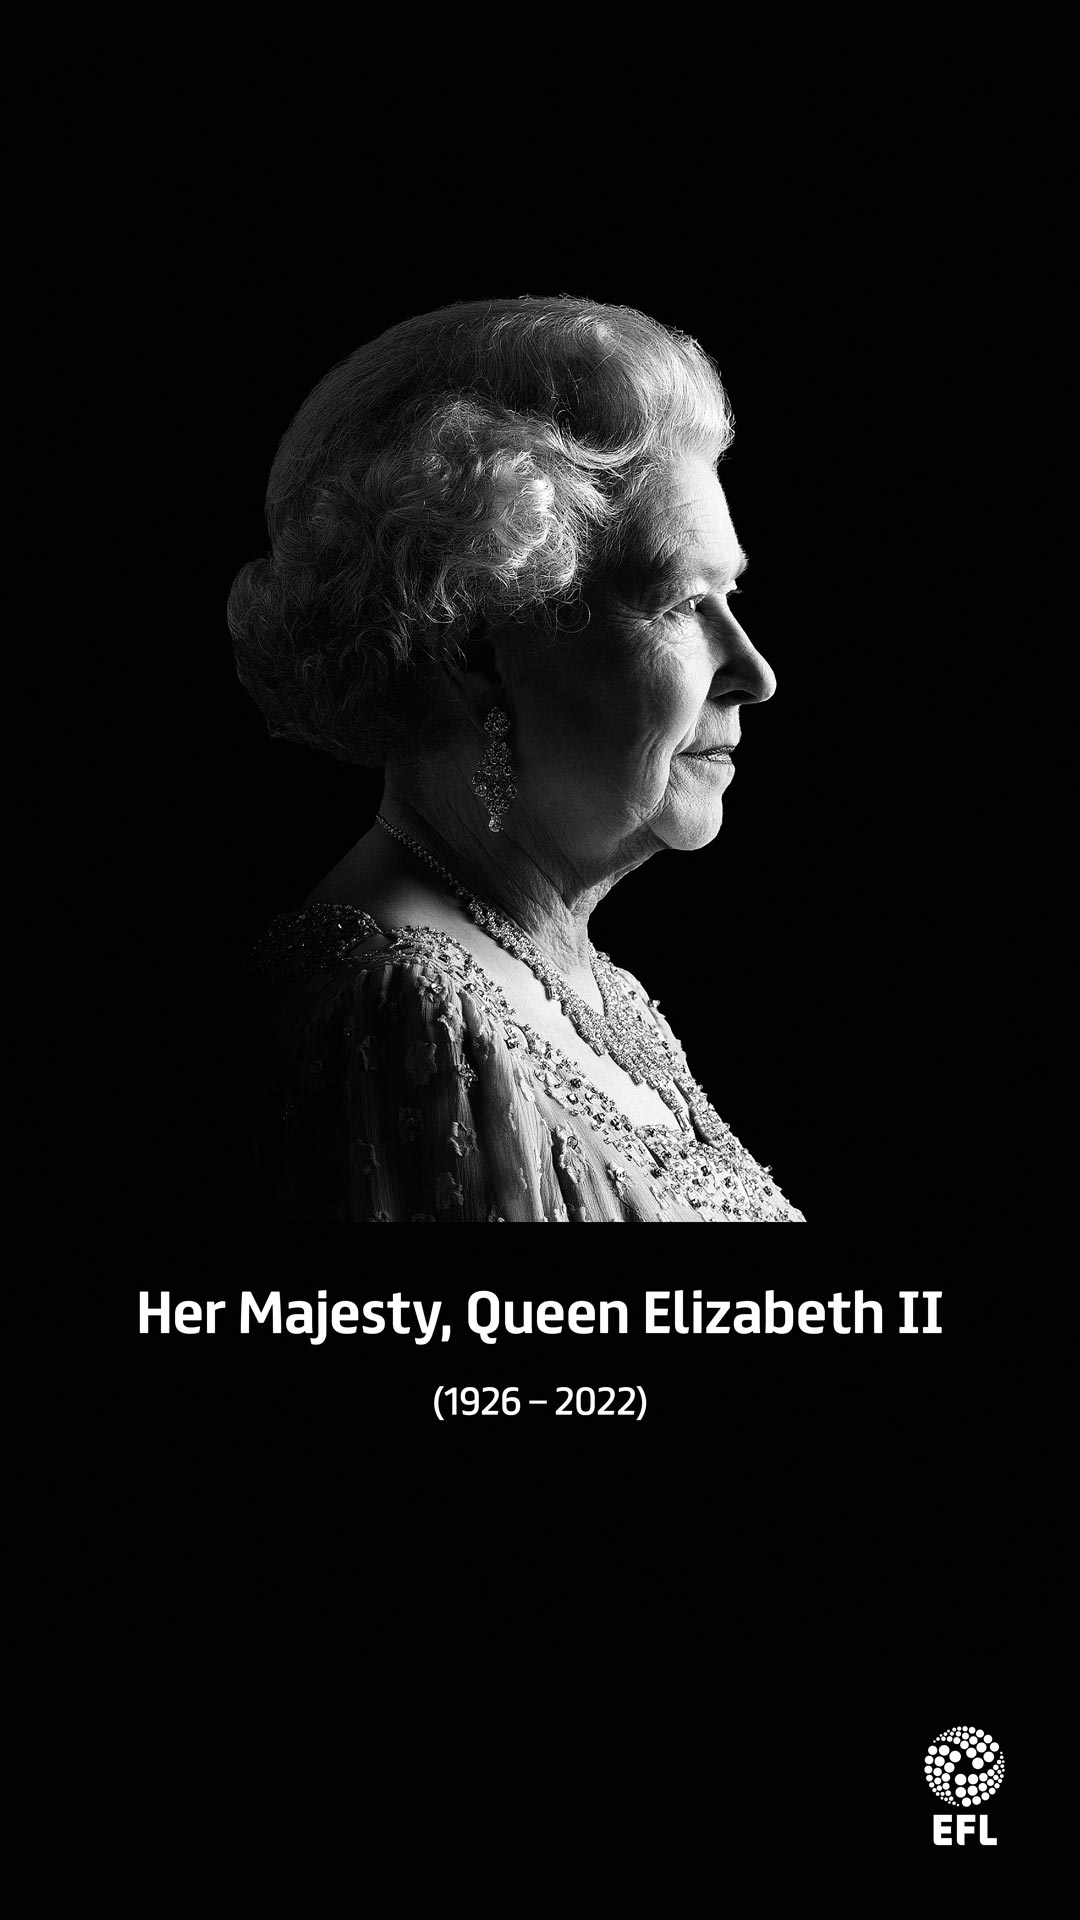 Her Majesty, Queen Elizabeth 2nd, 1926 to 2022